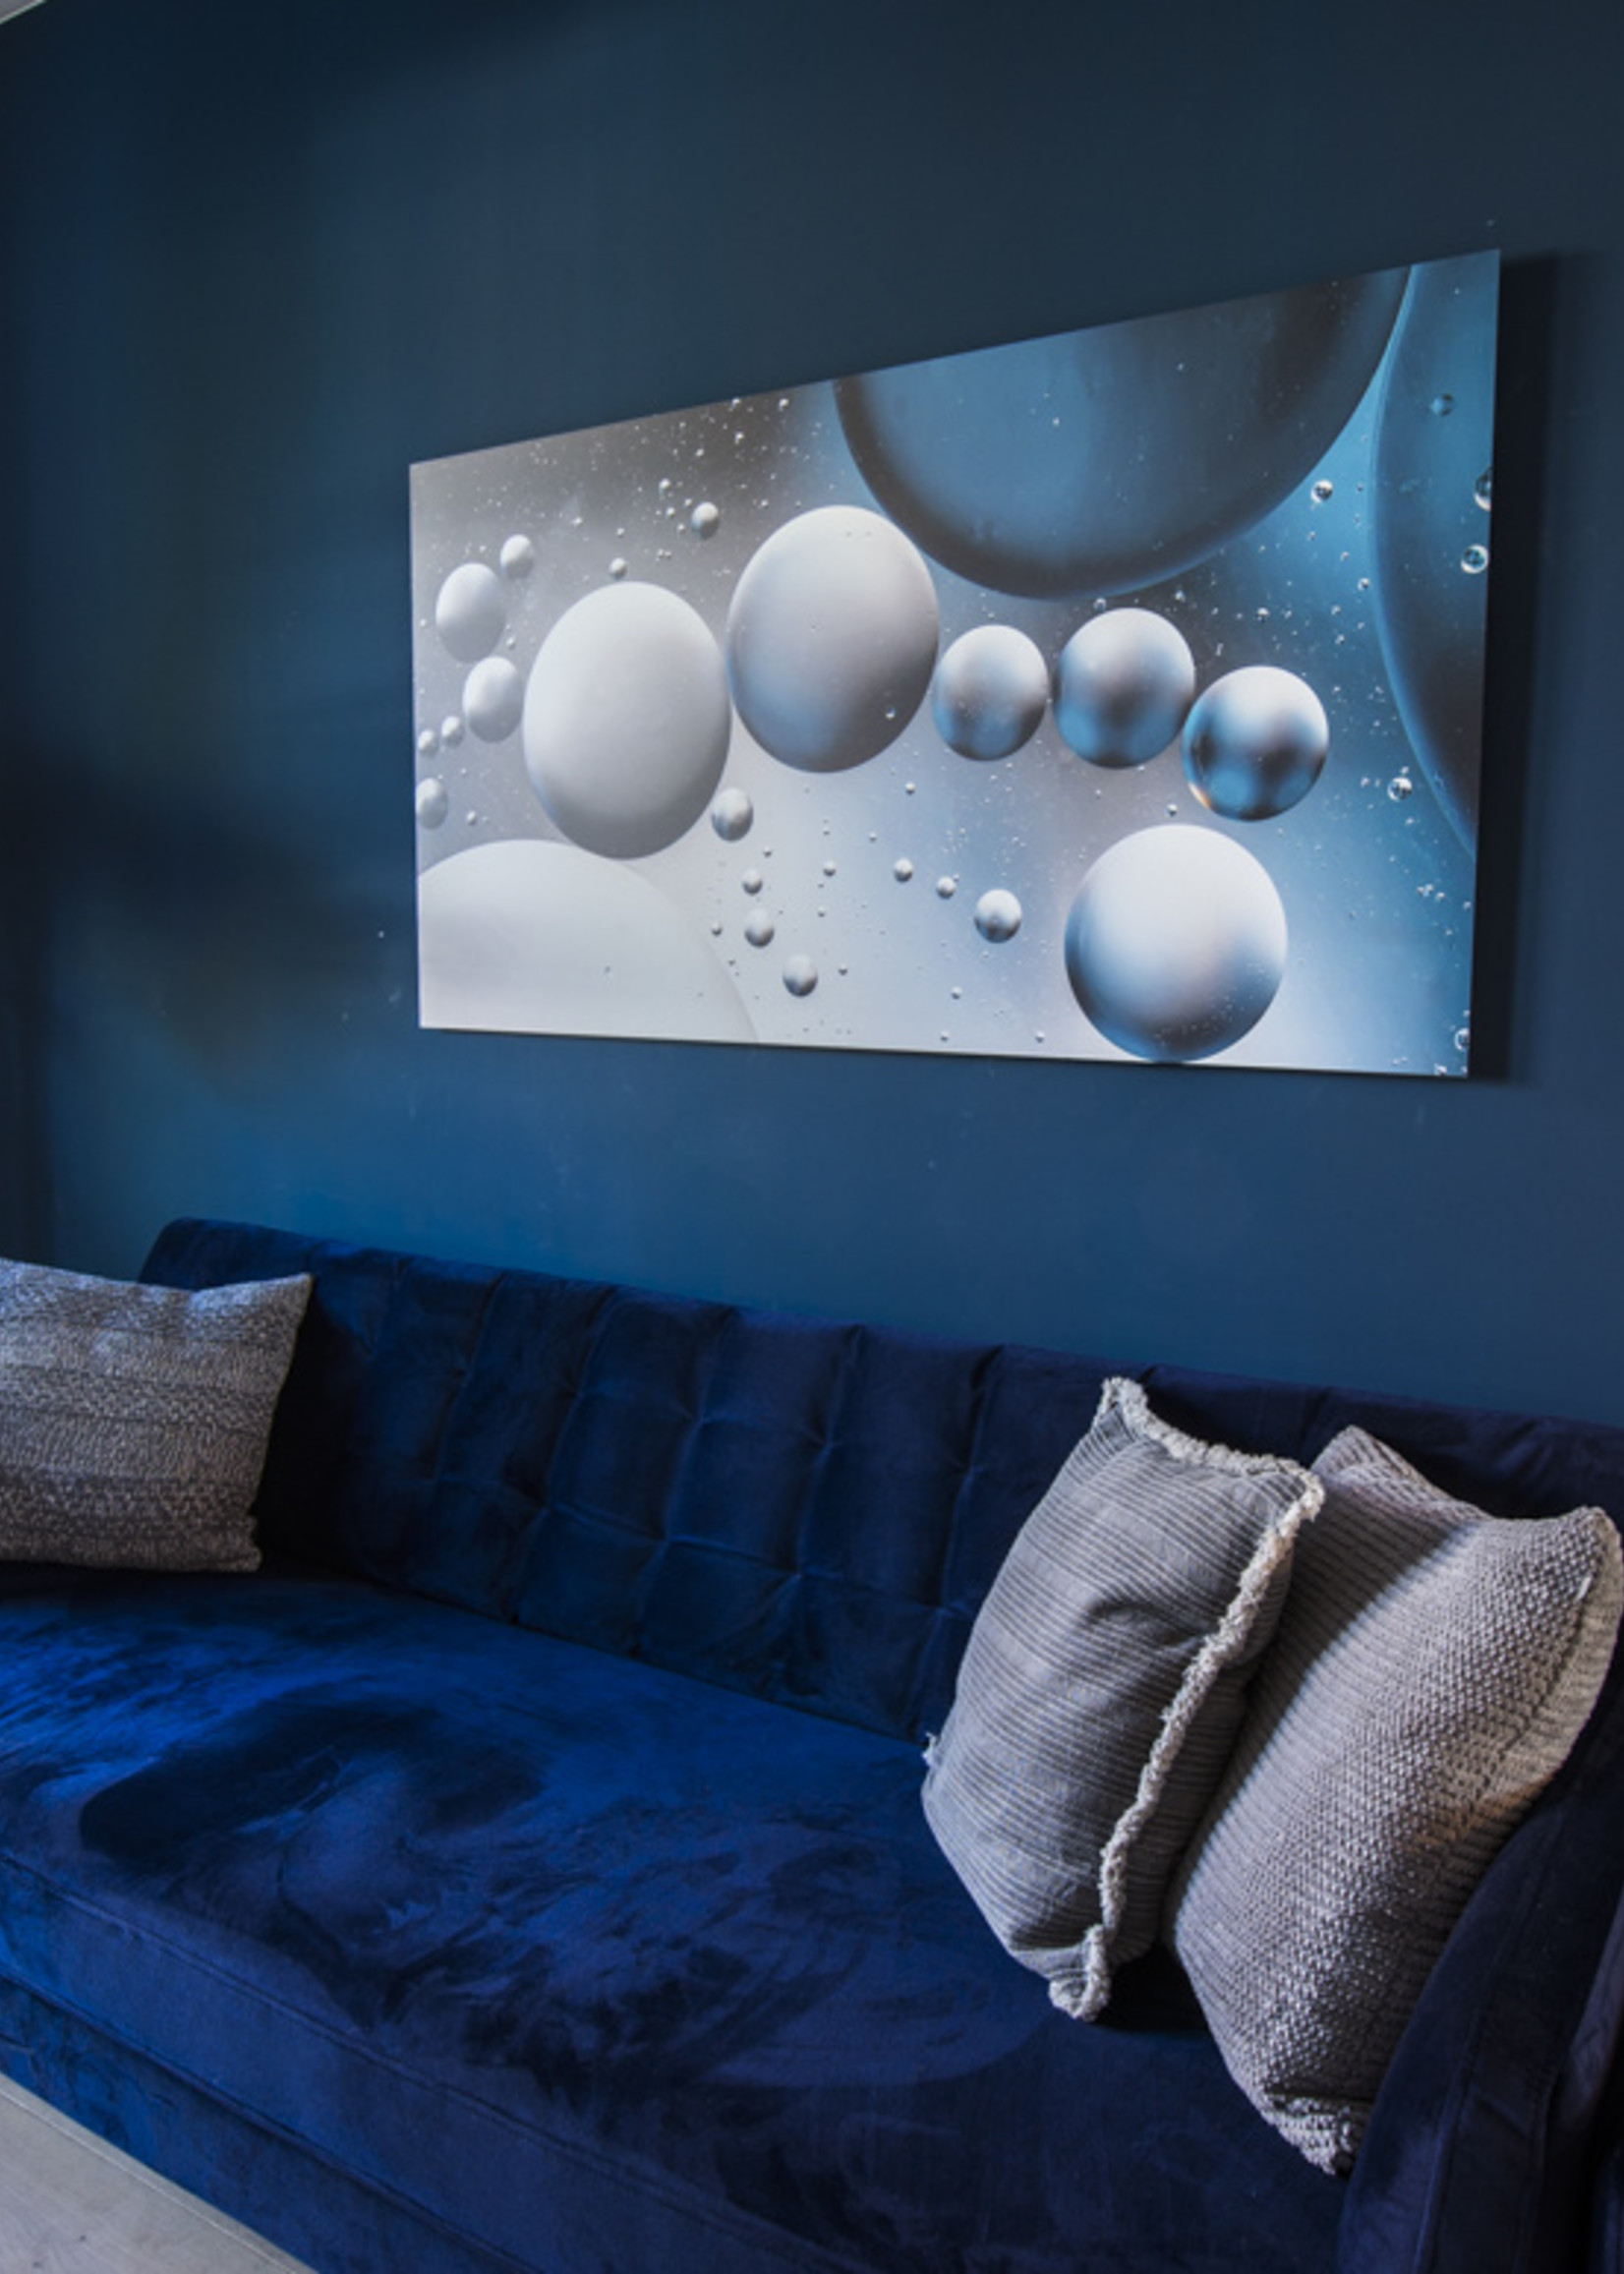 Frans van Steijn Wall photo "Art Orbit" Aluminum on Dibond 120 cm